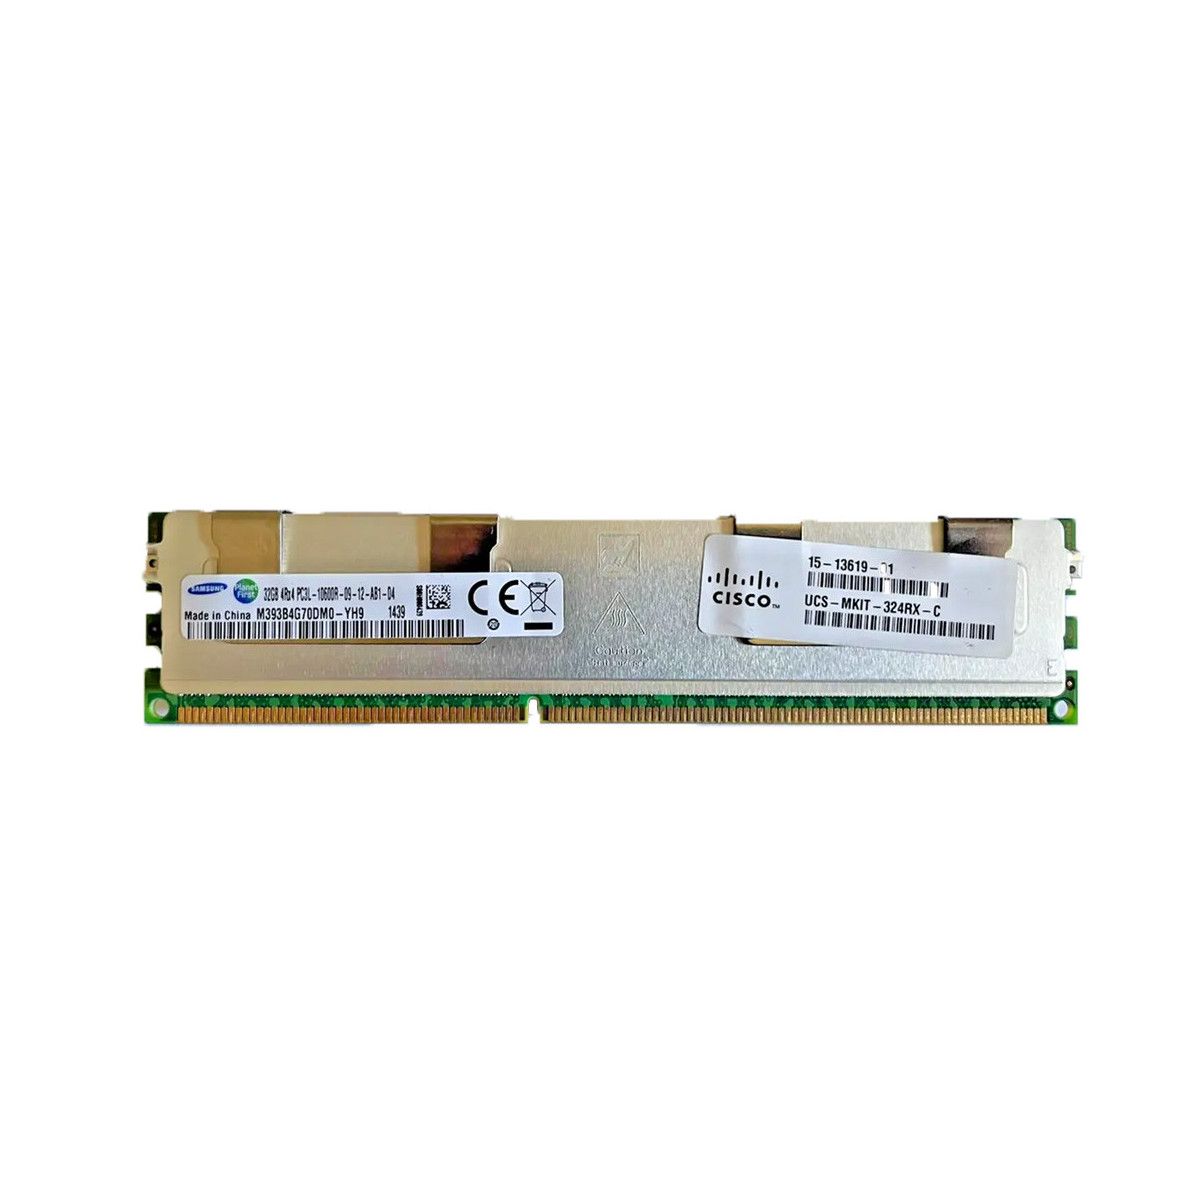 7042211-MS - Memstar 1x 32GB DDR3-1333 RDIMM PC3L-10600R